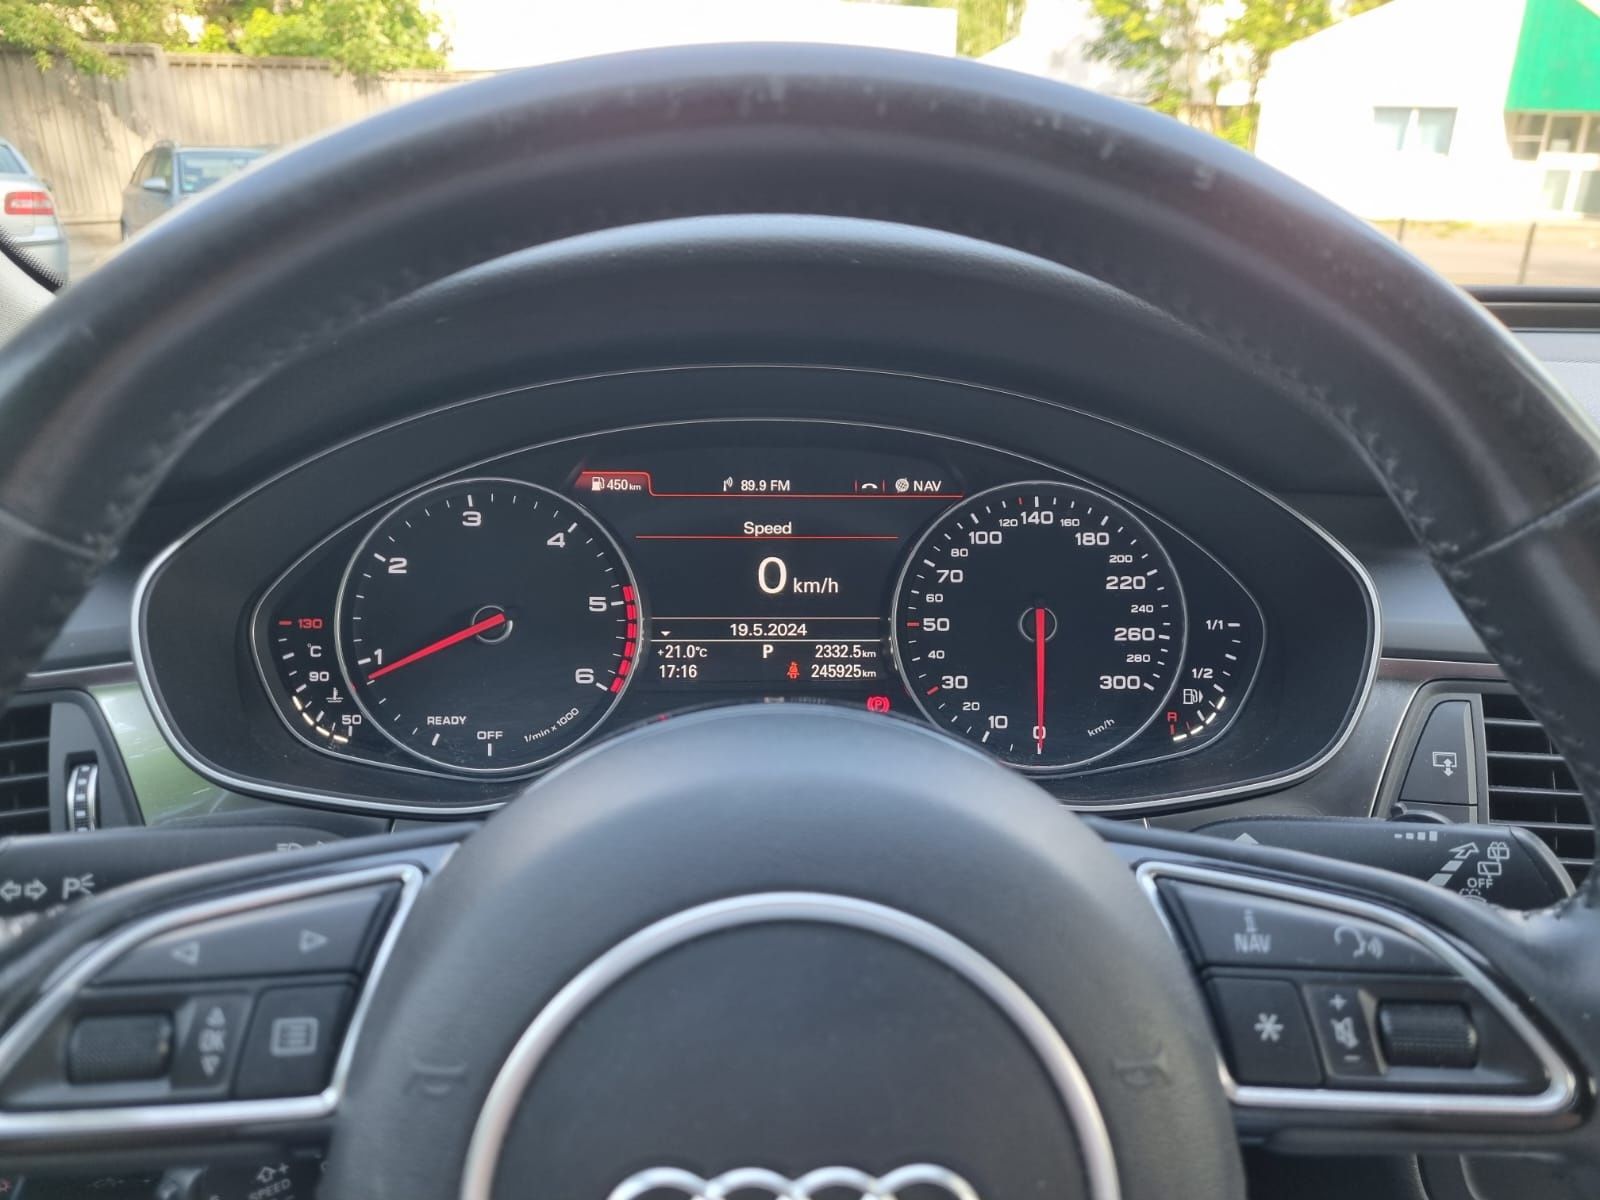 Vând Audi A6 C7 2.0 TDI QUATTRO 190 CP


- Transmisie automata

- Eur